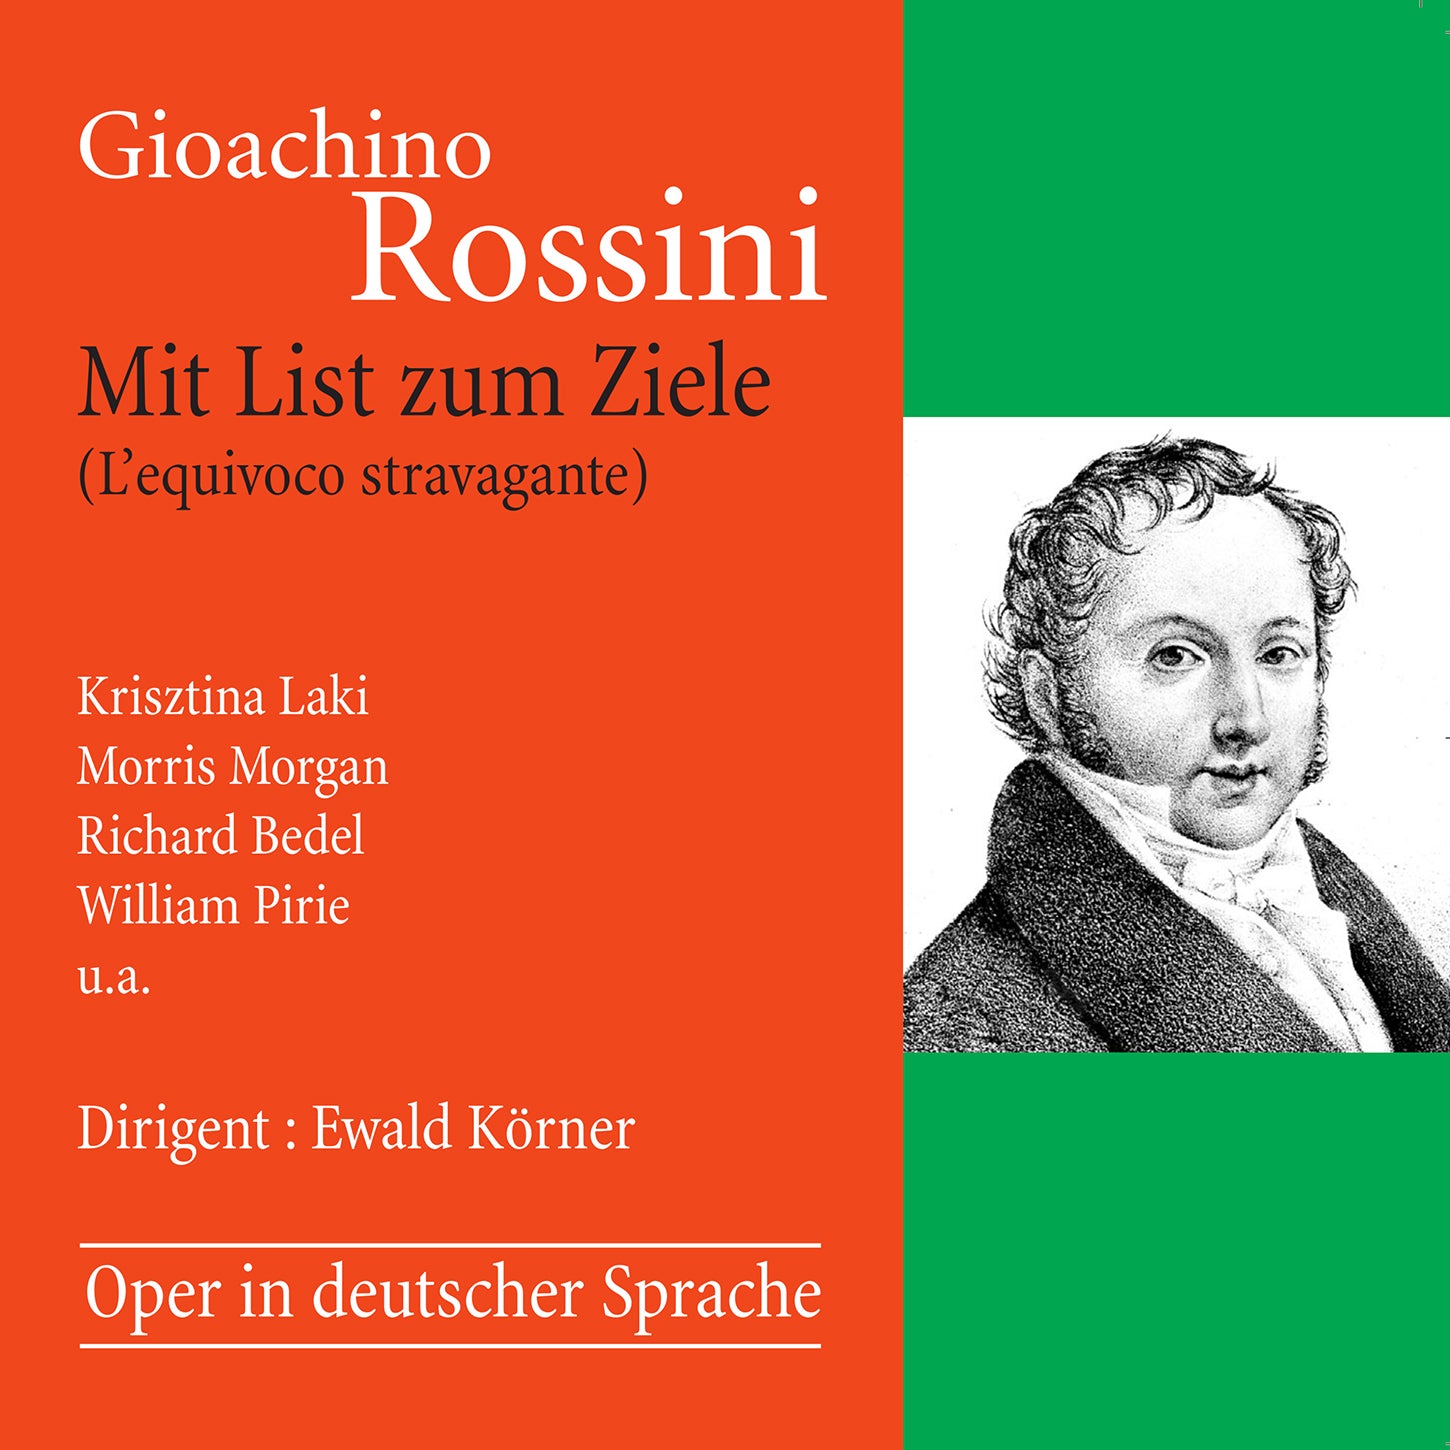 Rossini: Mit List zum Ziele (L'equivoco stravagante in German) / Laki, Morgan, Bedel, Pirie, Körner, Bern Symphony Orchestra